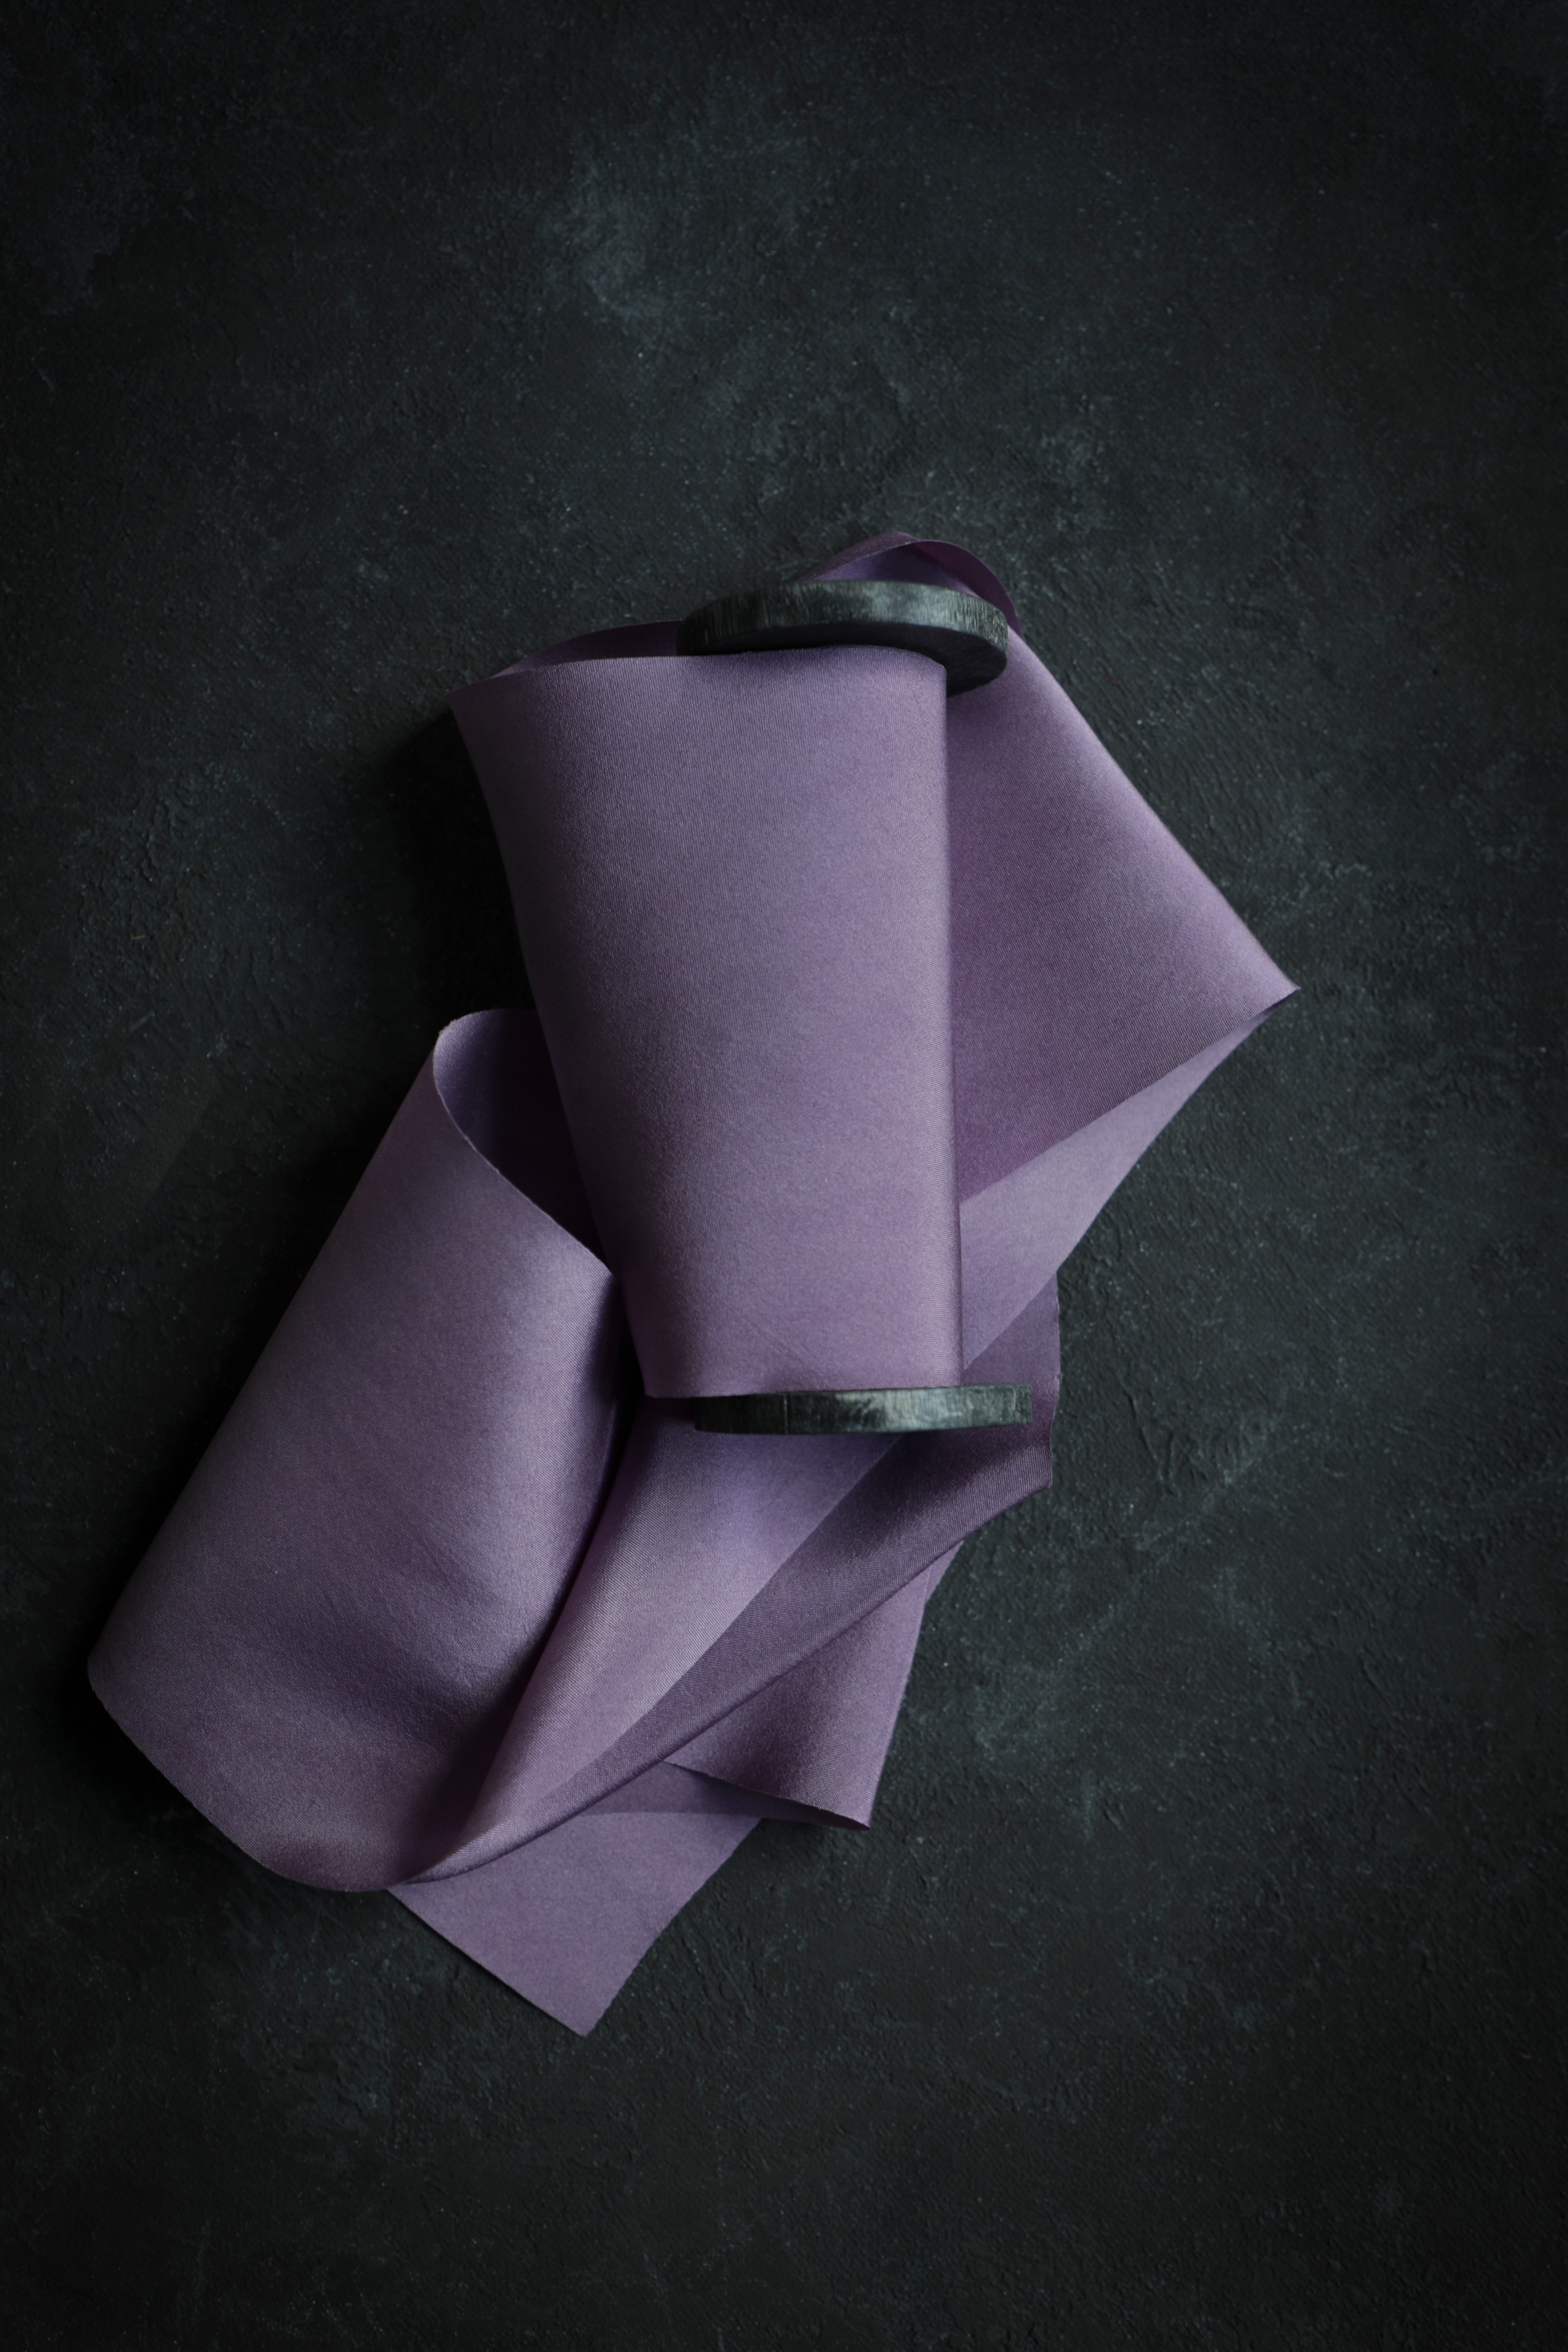 Satin Ribbon Lilac  Shine Trimmings & Fabrics